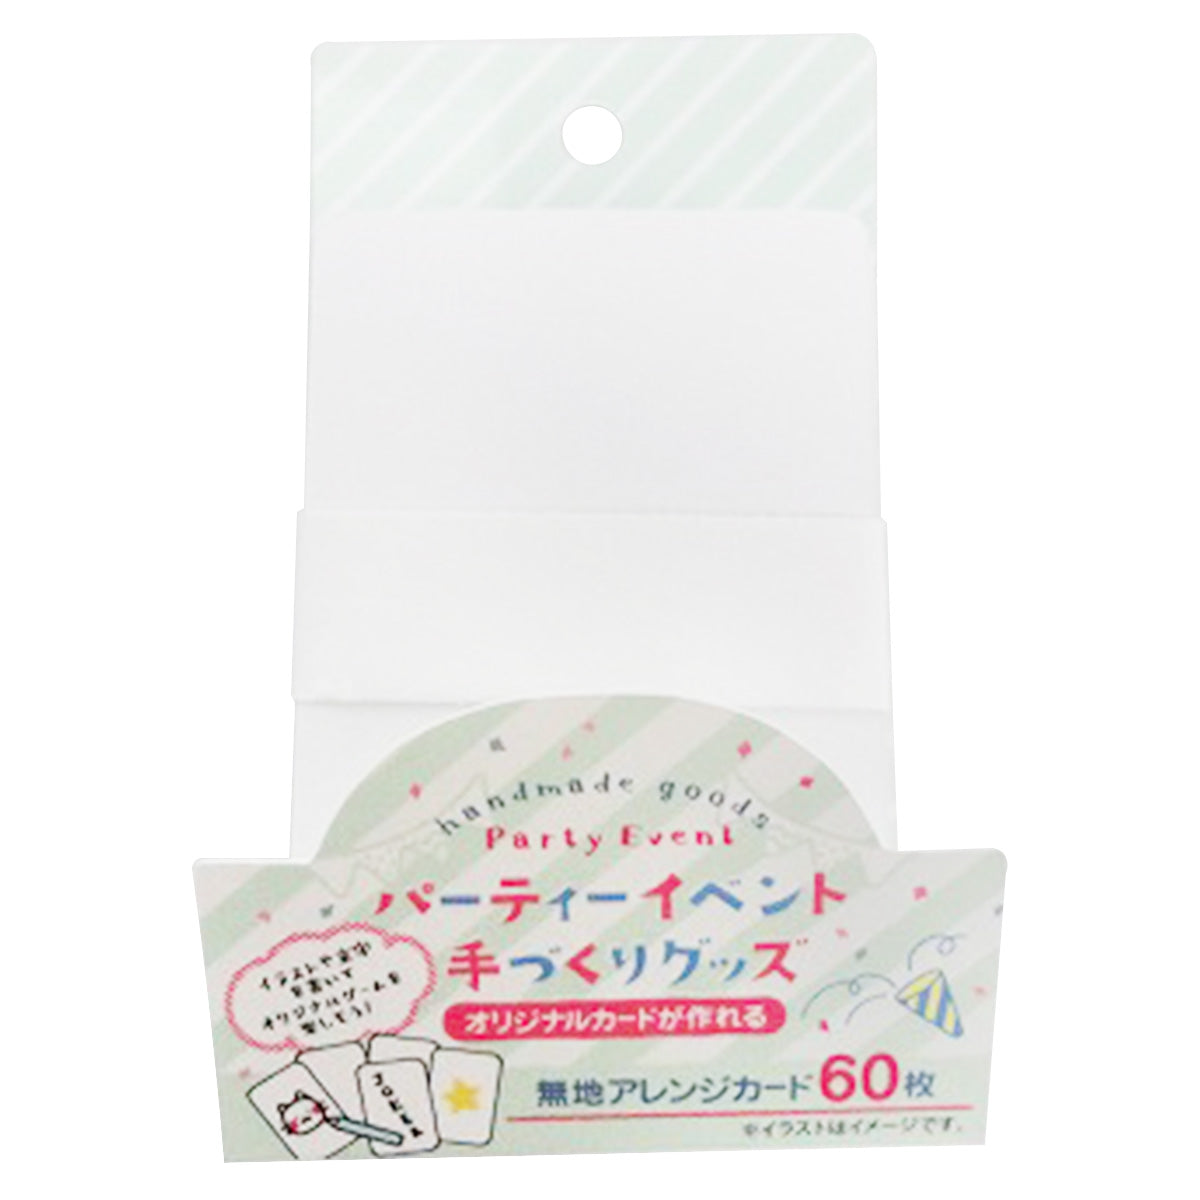 【OUTLET】パーティグッズ 無地 オリジナルカード アレンジカード 60枚 349307